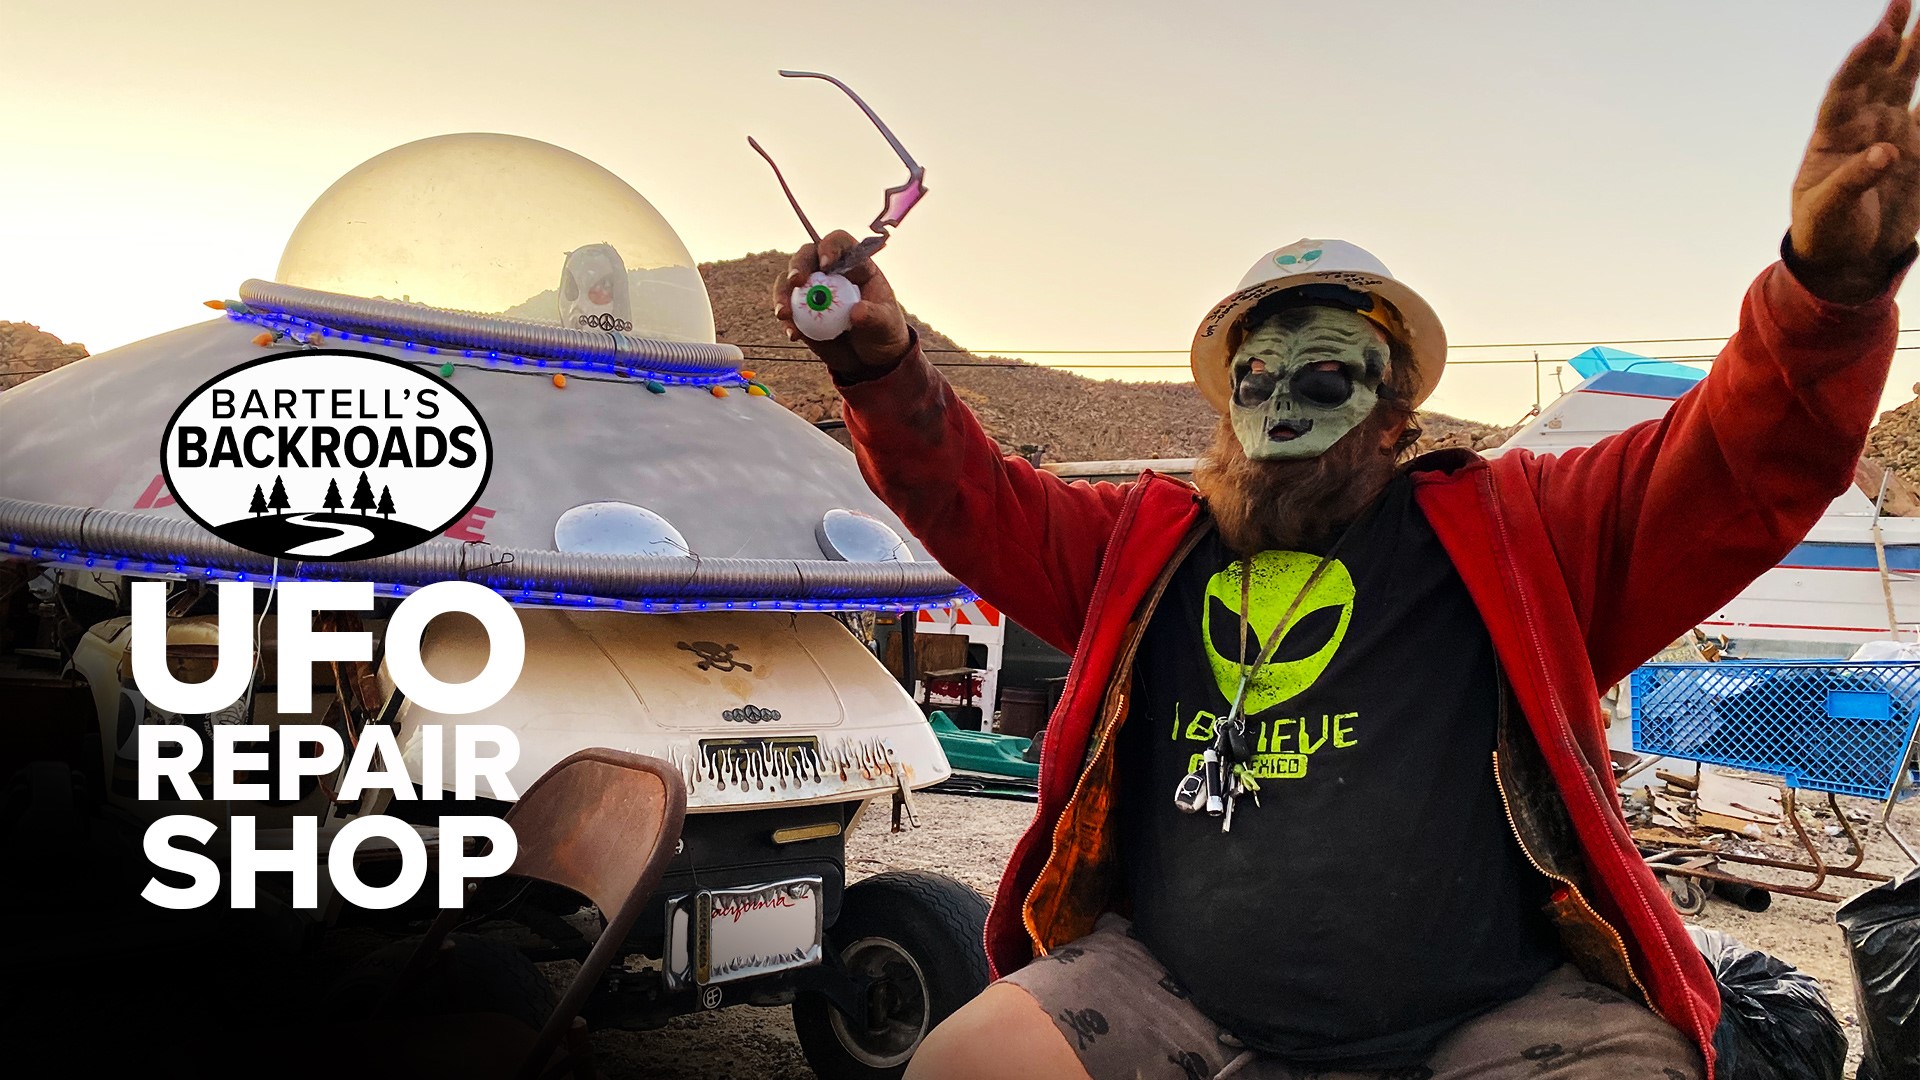 UFO repair shop keeps its mechanic busy in California desert | Bartell